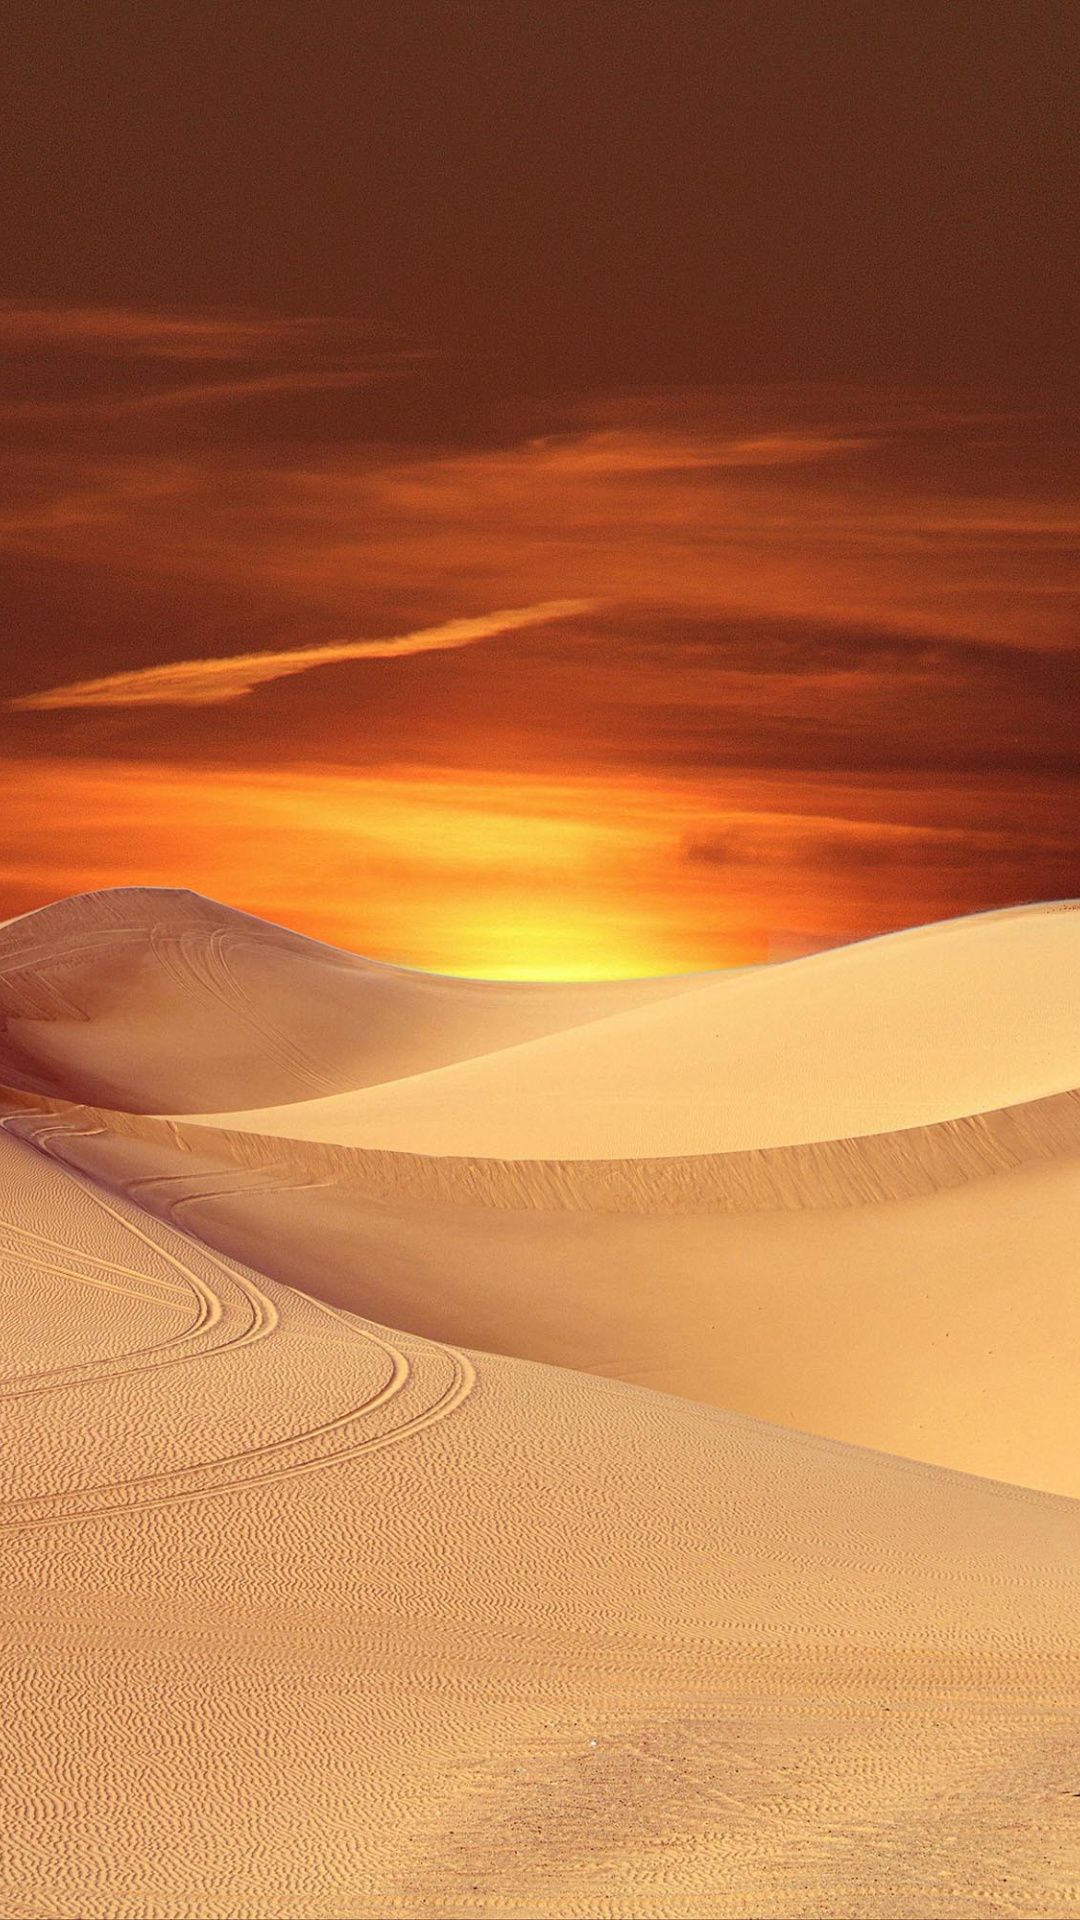 Desert sand (color) - Wikipedia